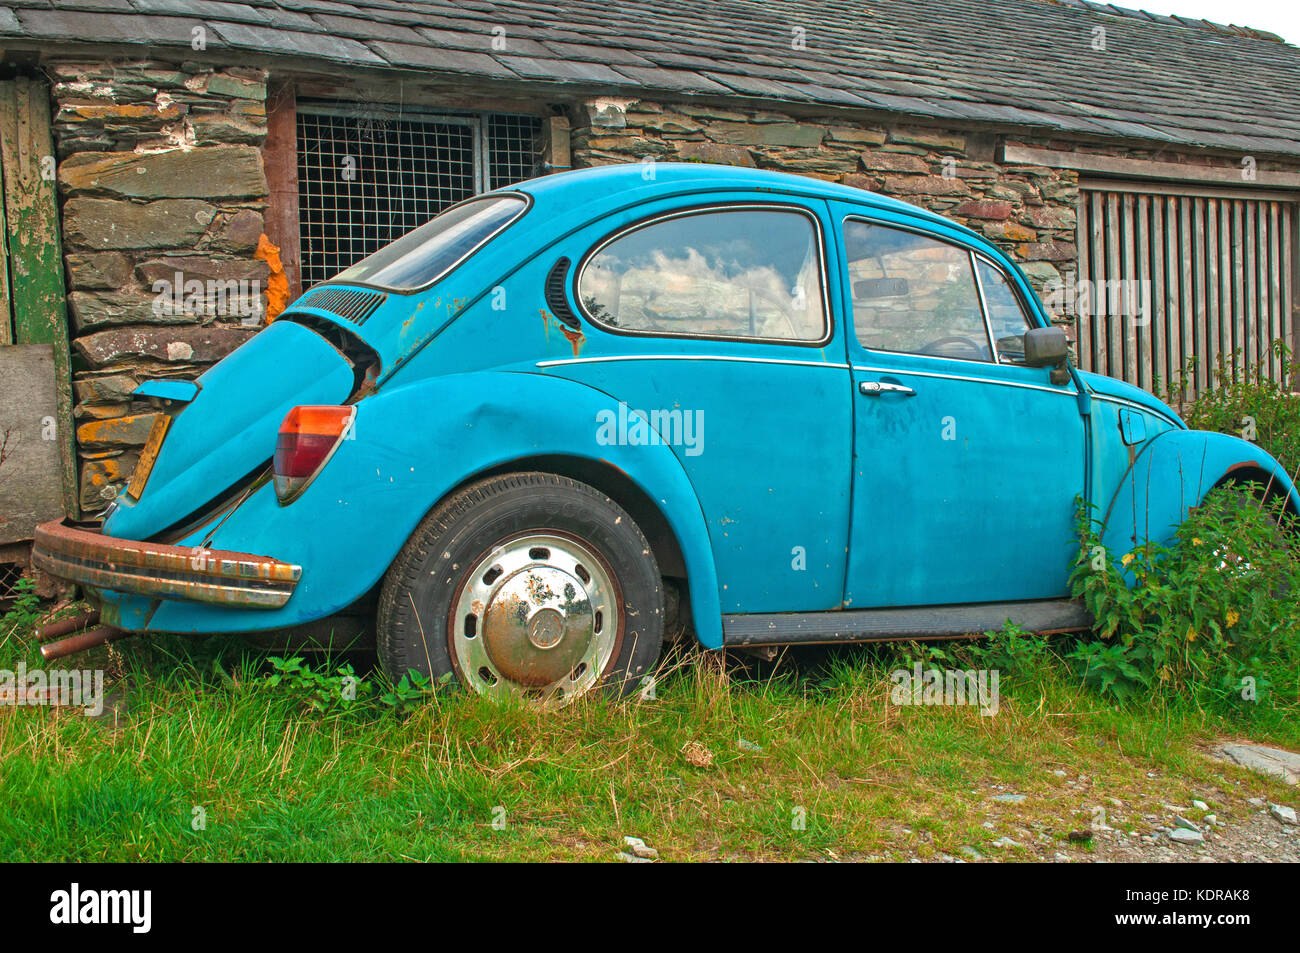 Old abandoned Volkswagen Beetle Car outside barn Stock Photo